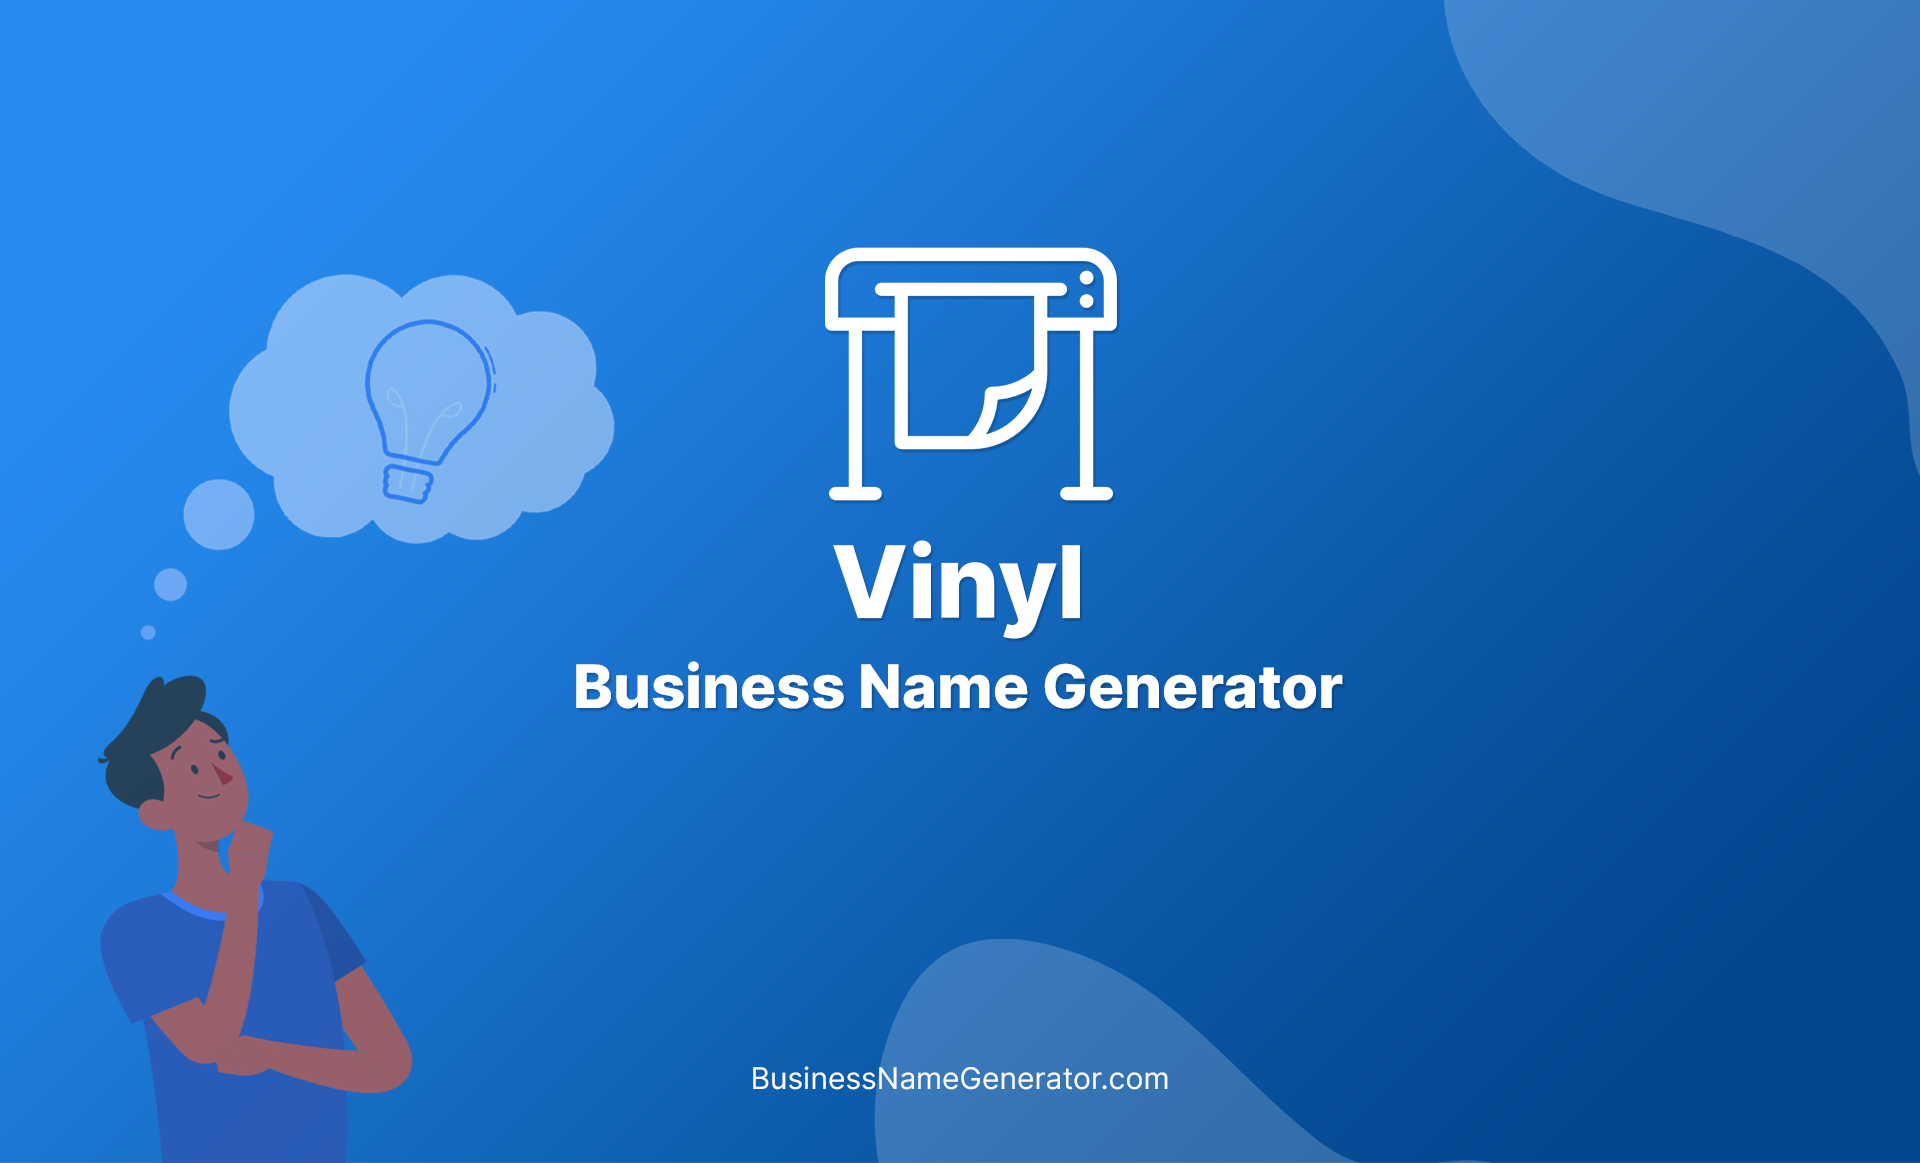 Vinyl Business Name Generator